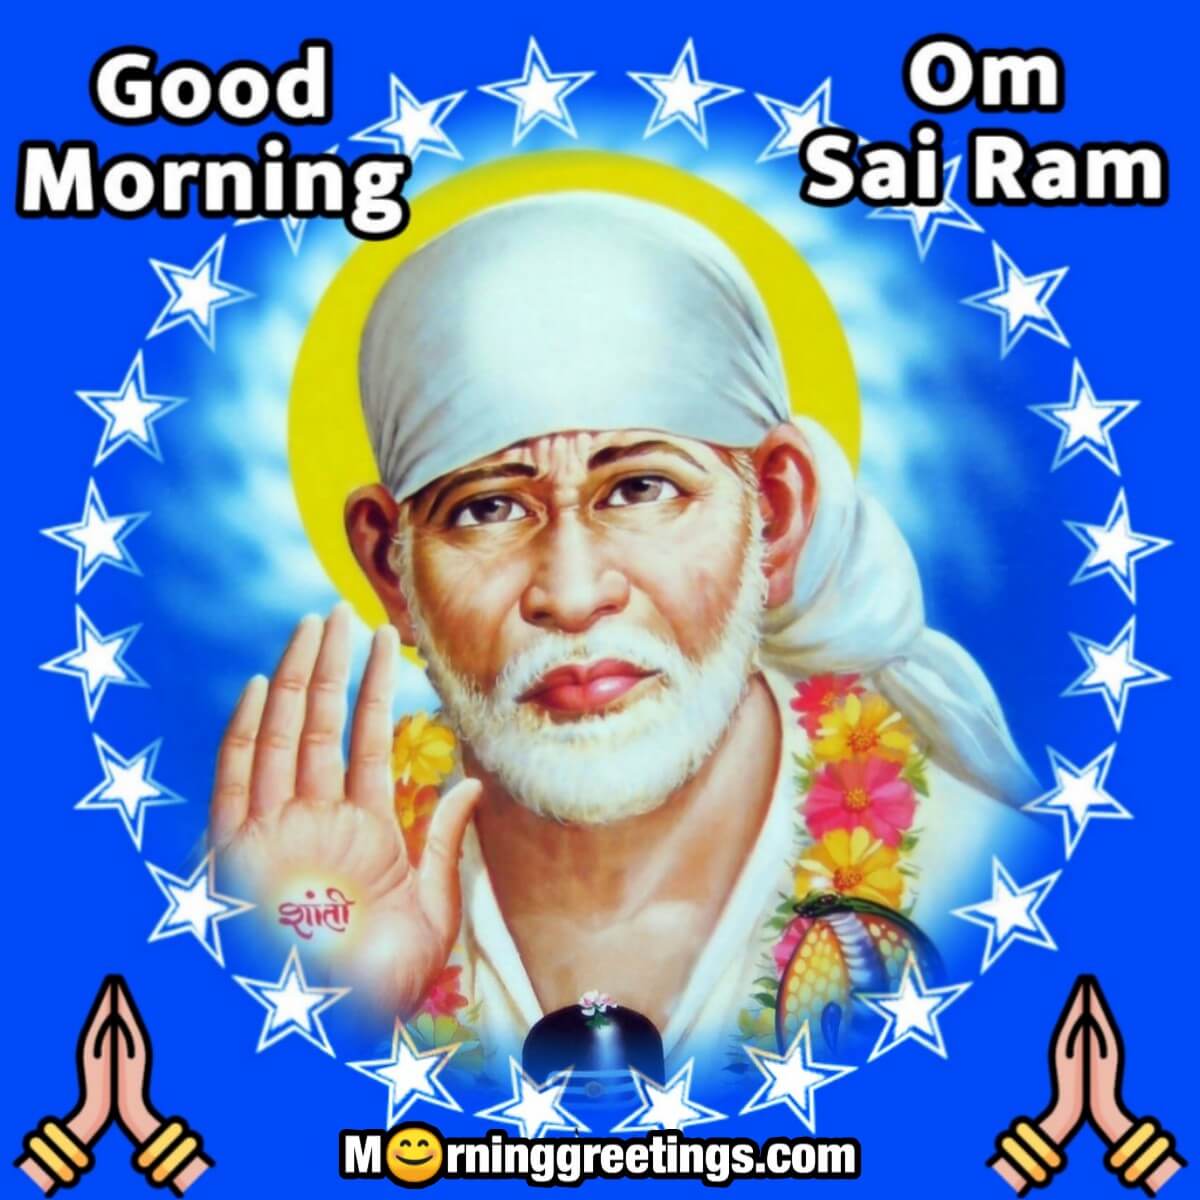 Good Morning Om Sai Ram Photo